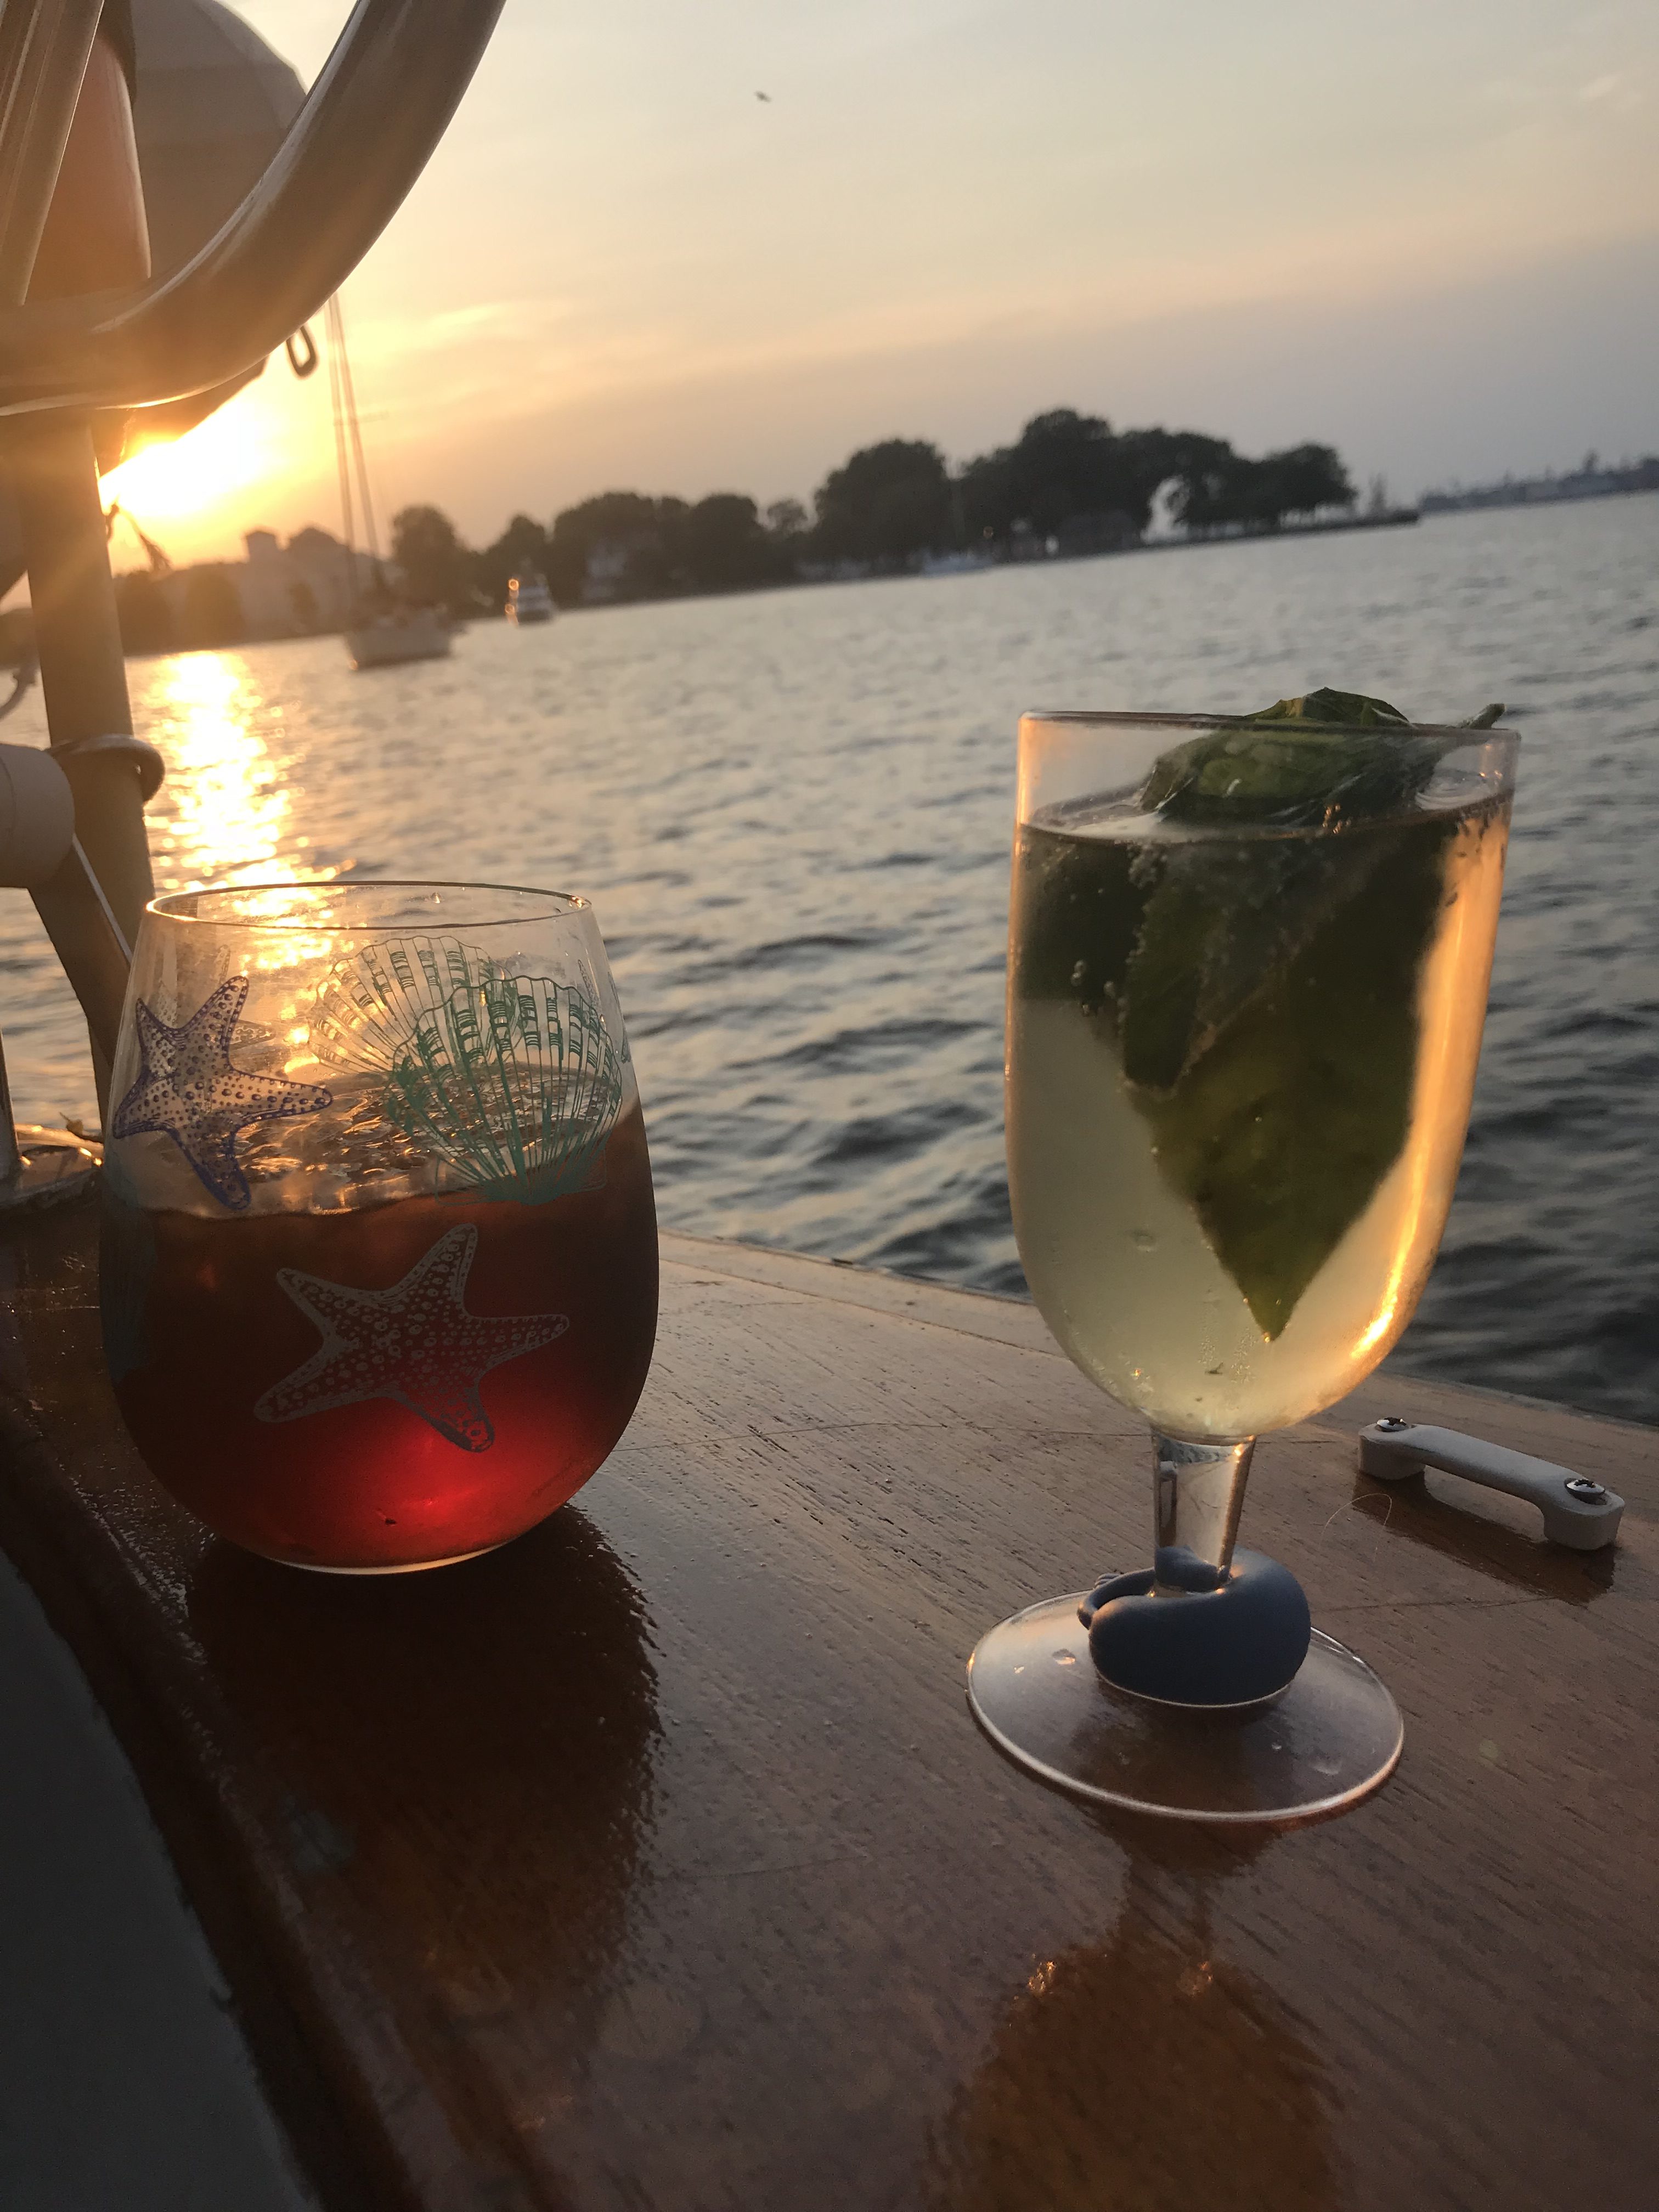 Anniversary drinks at sunset